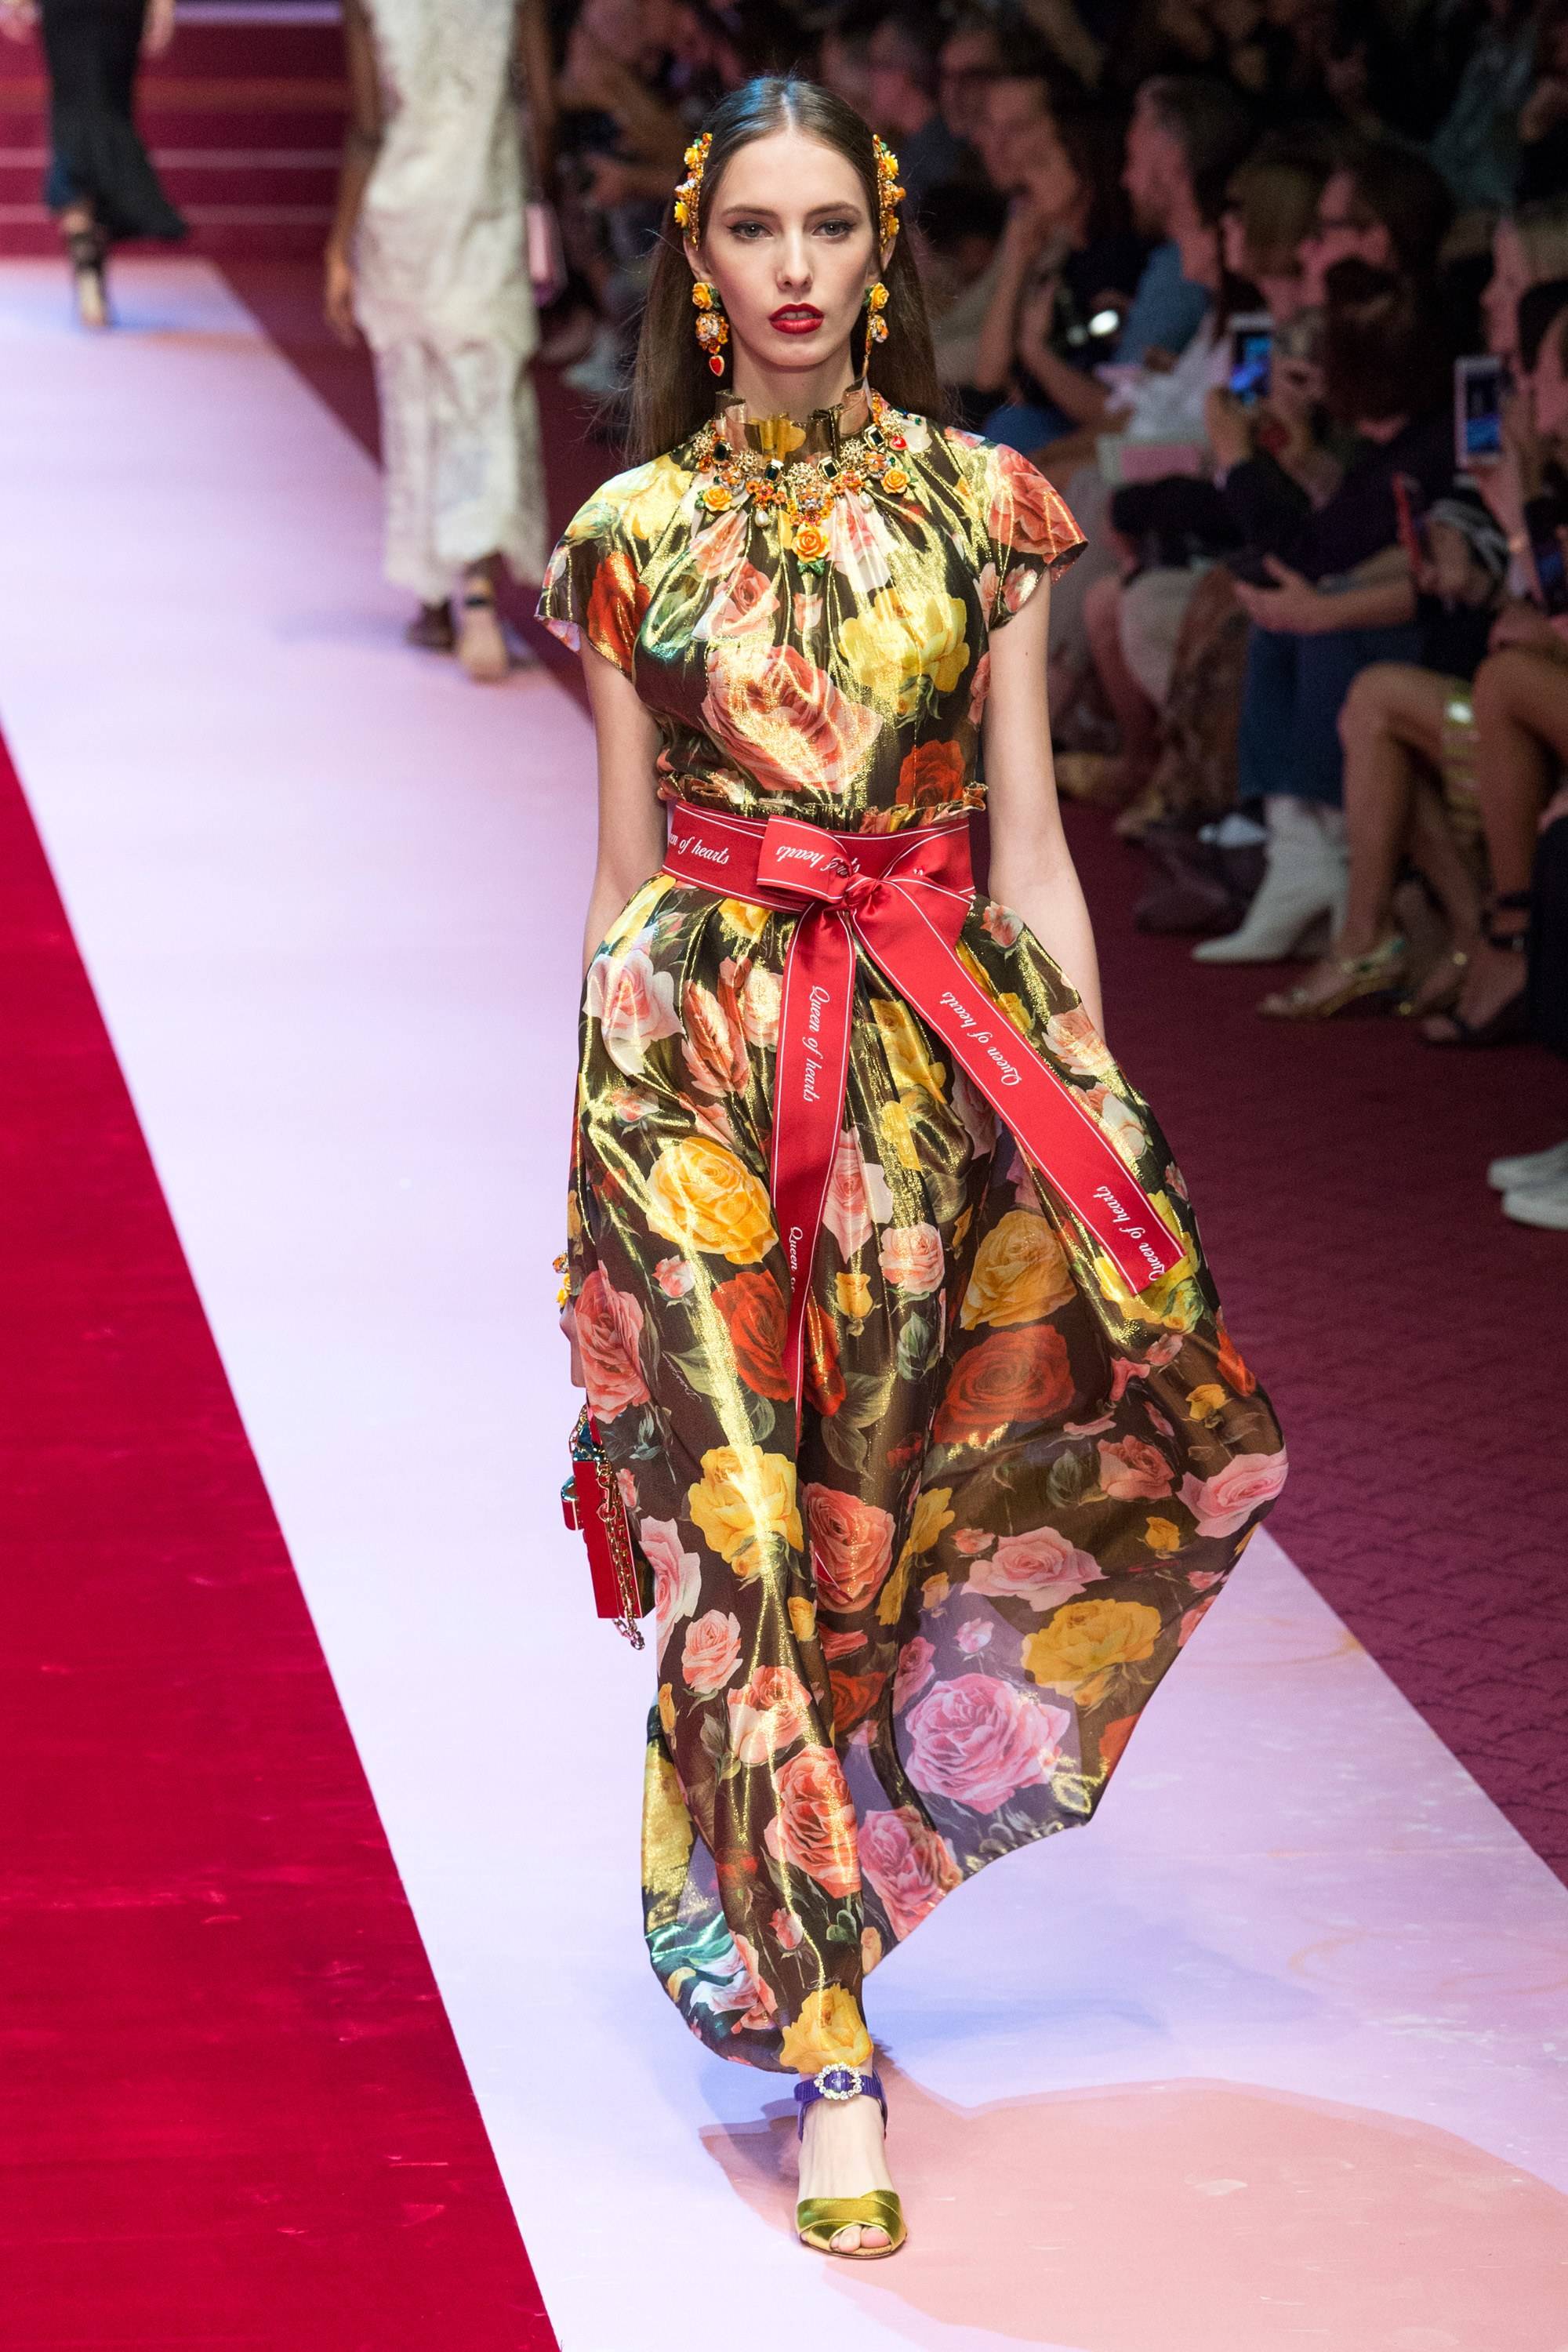 Dolce And Gabbana Ss 18 Milan Model Showlists Model Lists Skinny